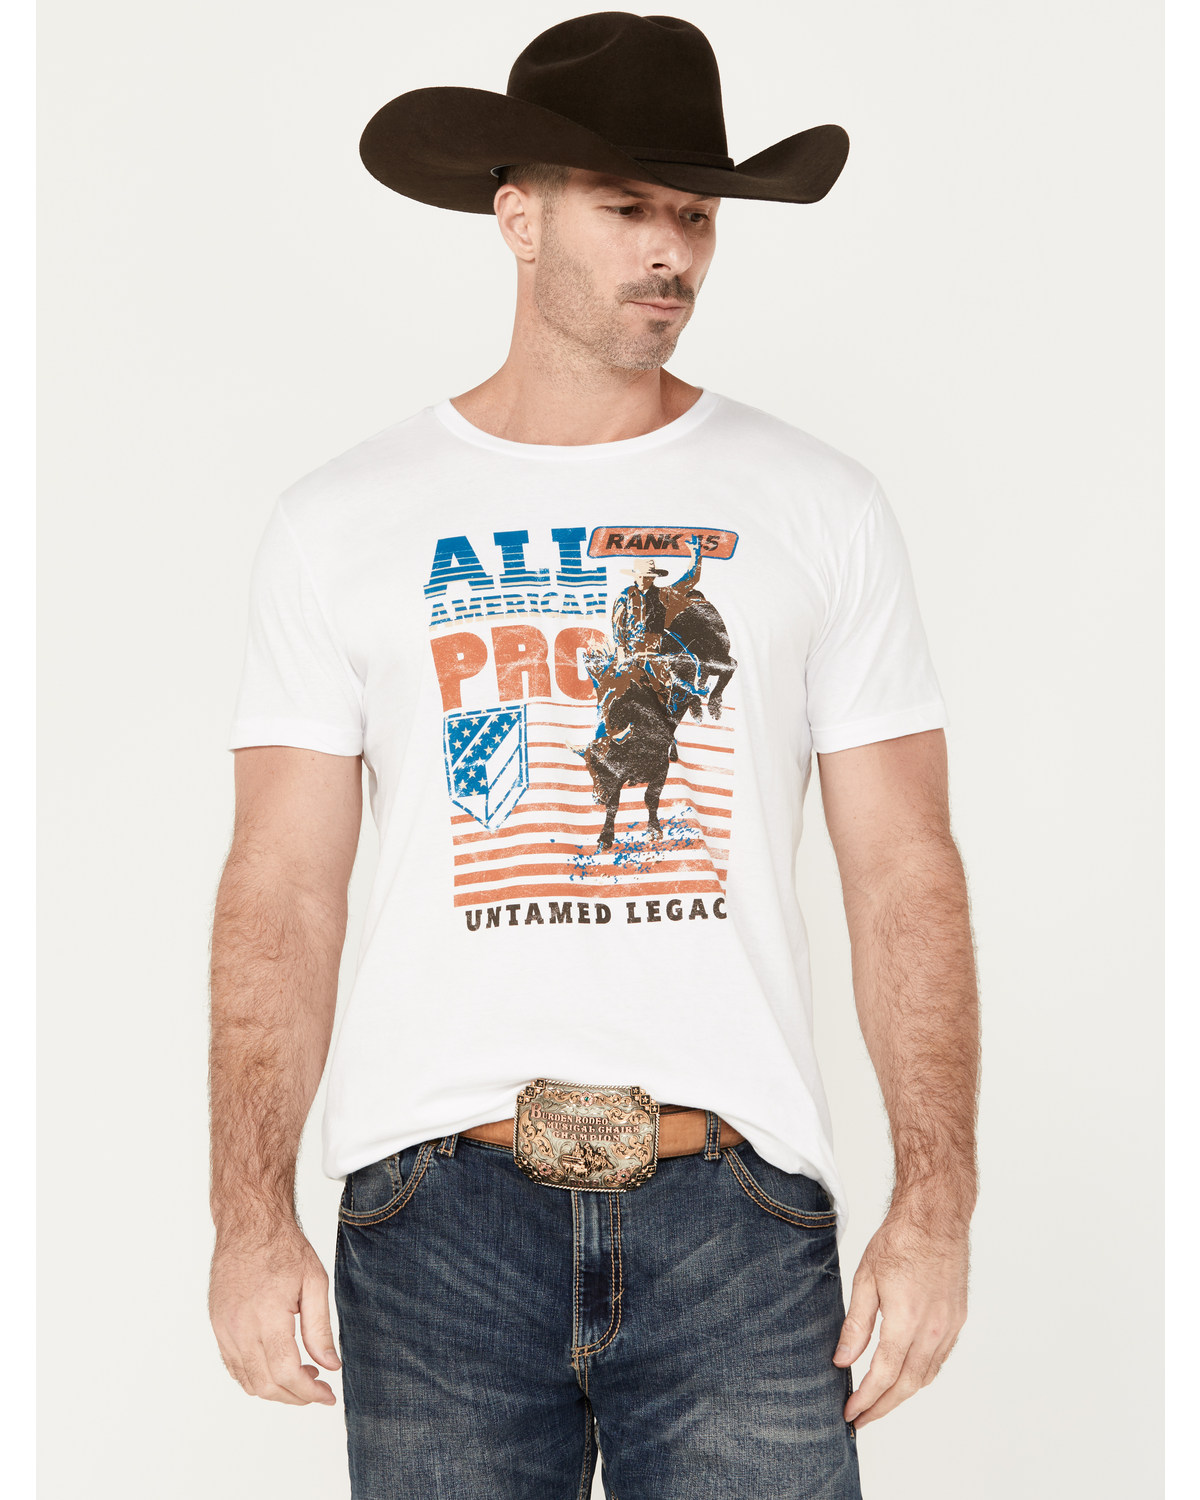 RANK 45® Men's All American Short Sleeve Graphic T-Shirt